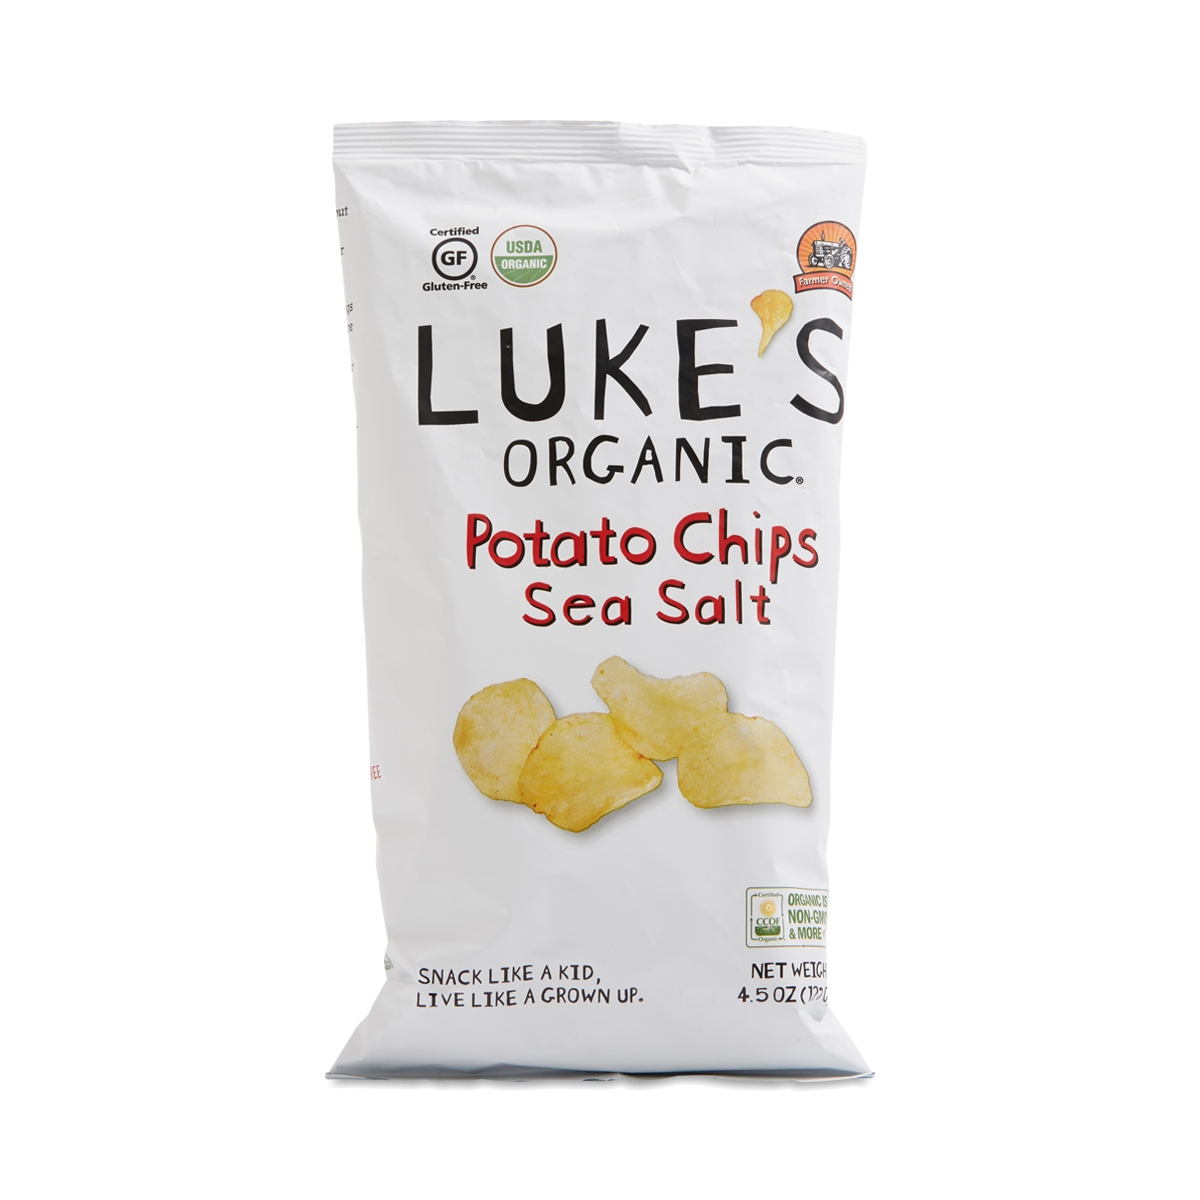 LUKE’S ORGANIC: Sea Salt Potato Chips, 4.5 oz - 0852406003068